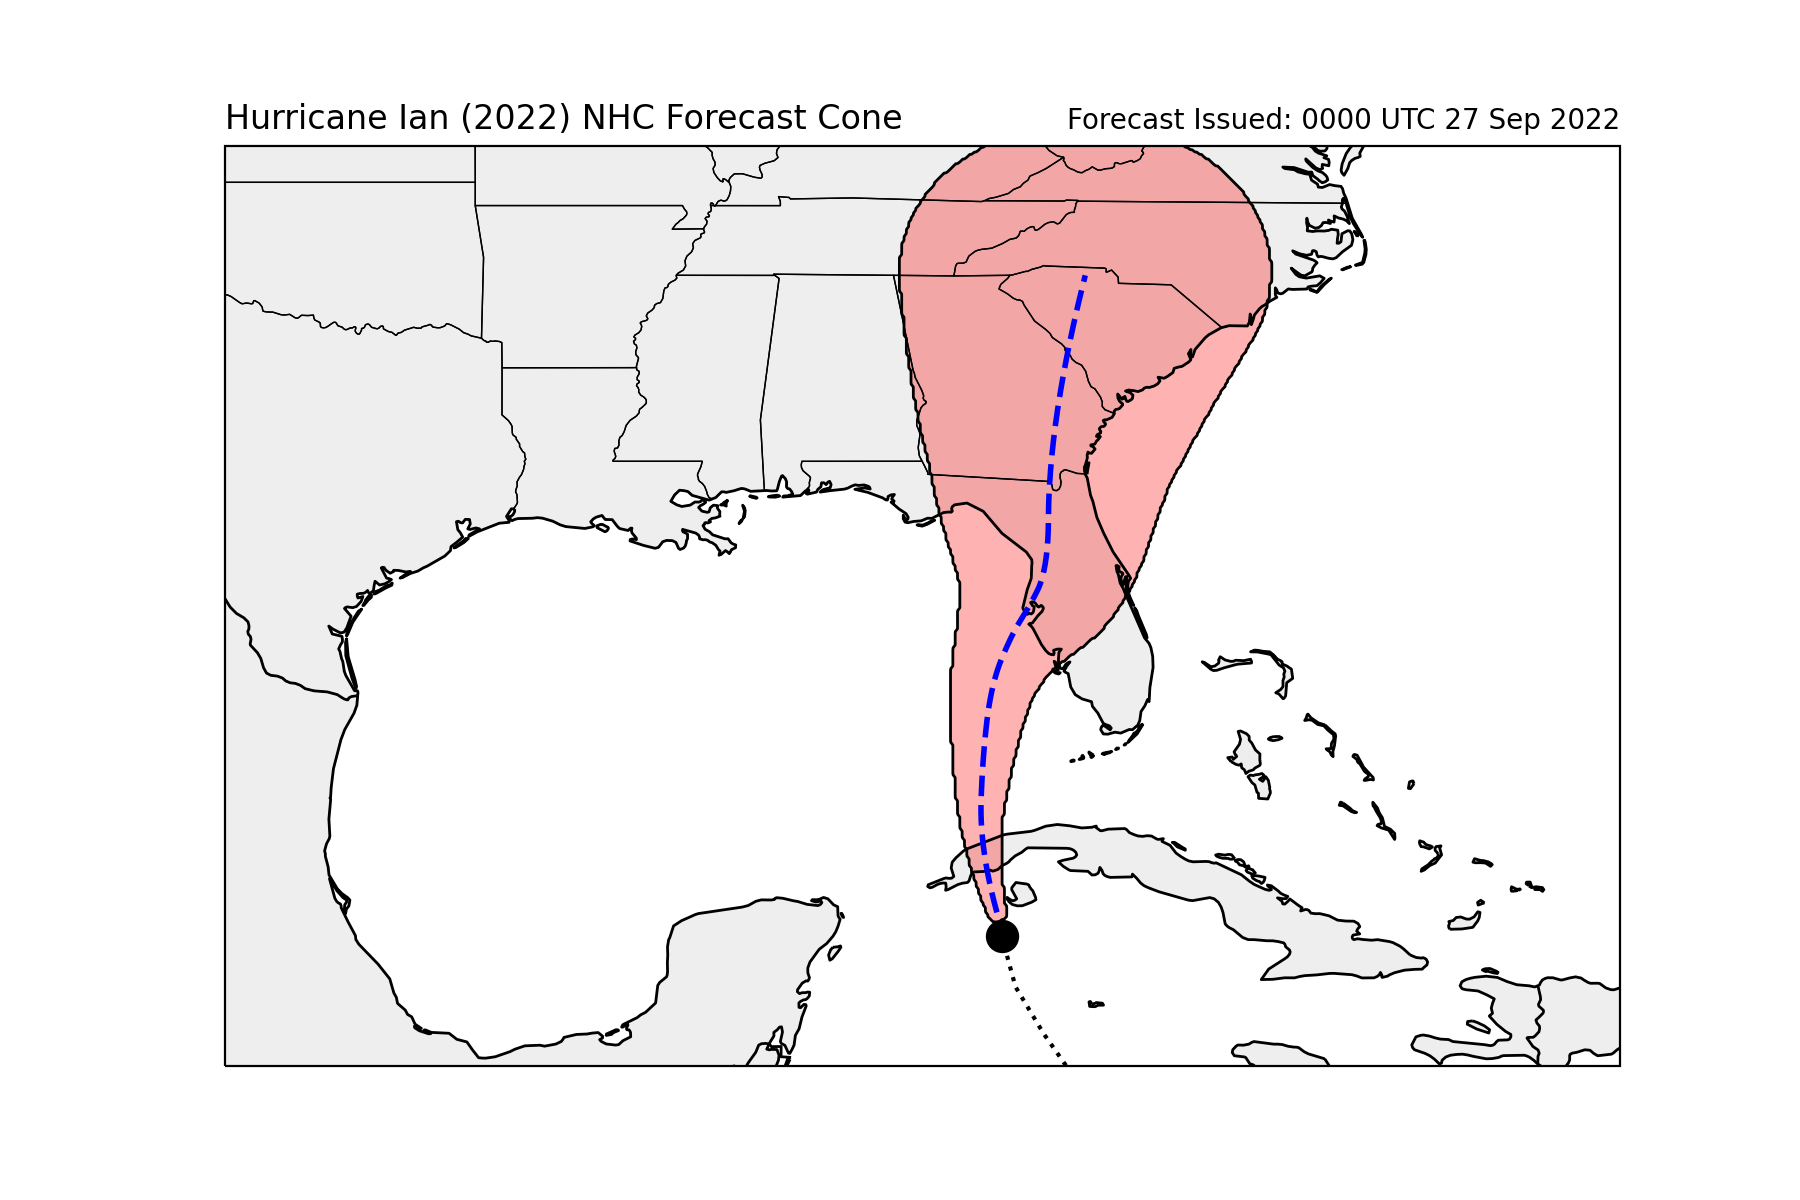 Hurricane Ian (2022) NHC Forecast Cone, Forecast Issued: 0000 UTC 27 Sep 2022